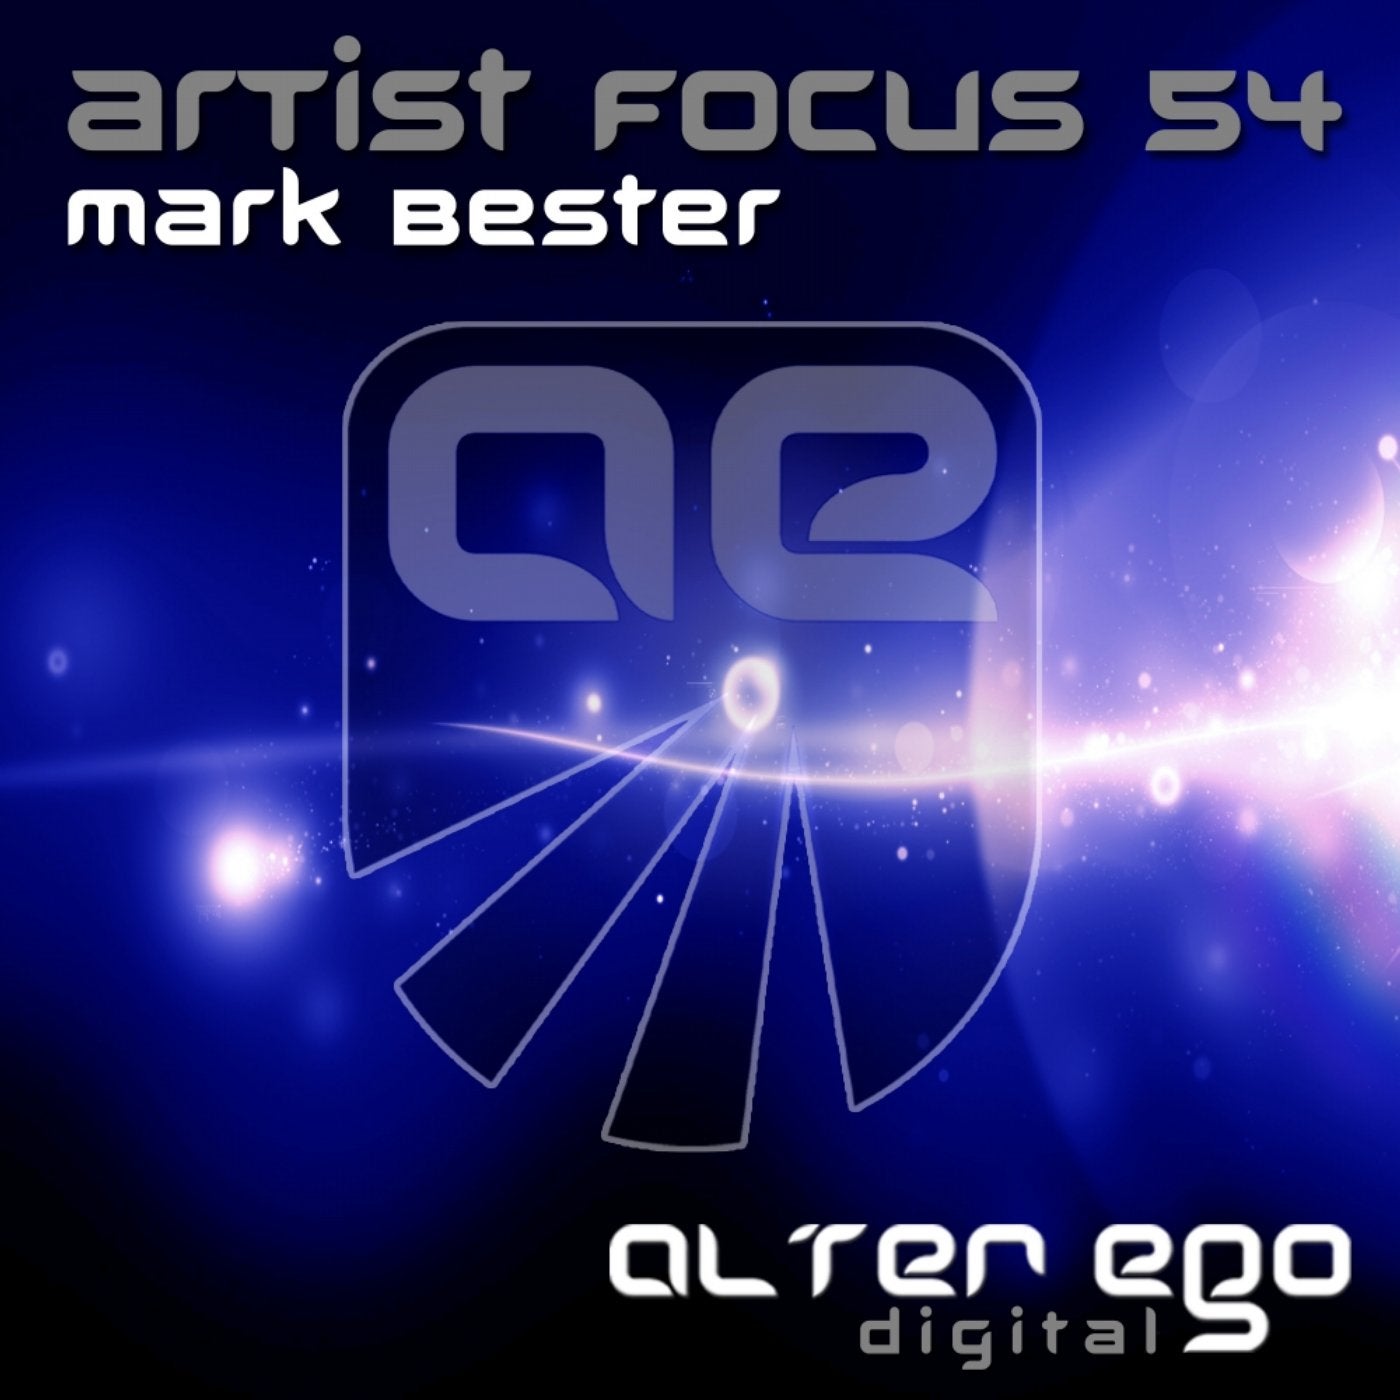 Artist Focus 54